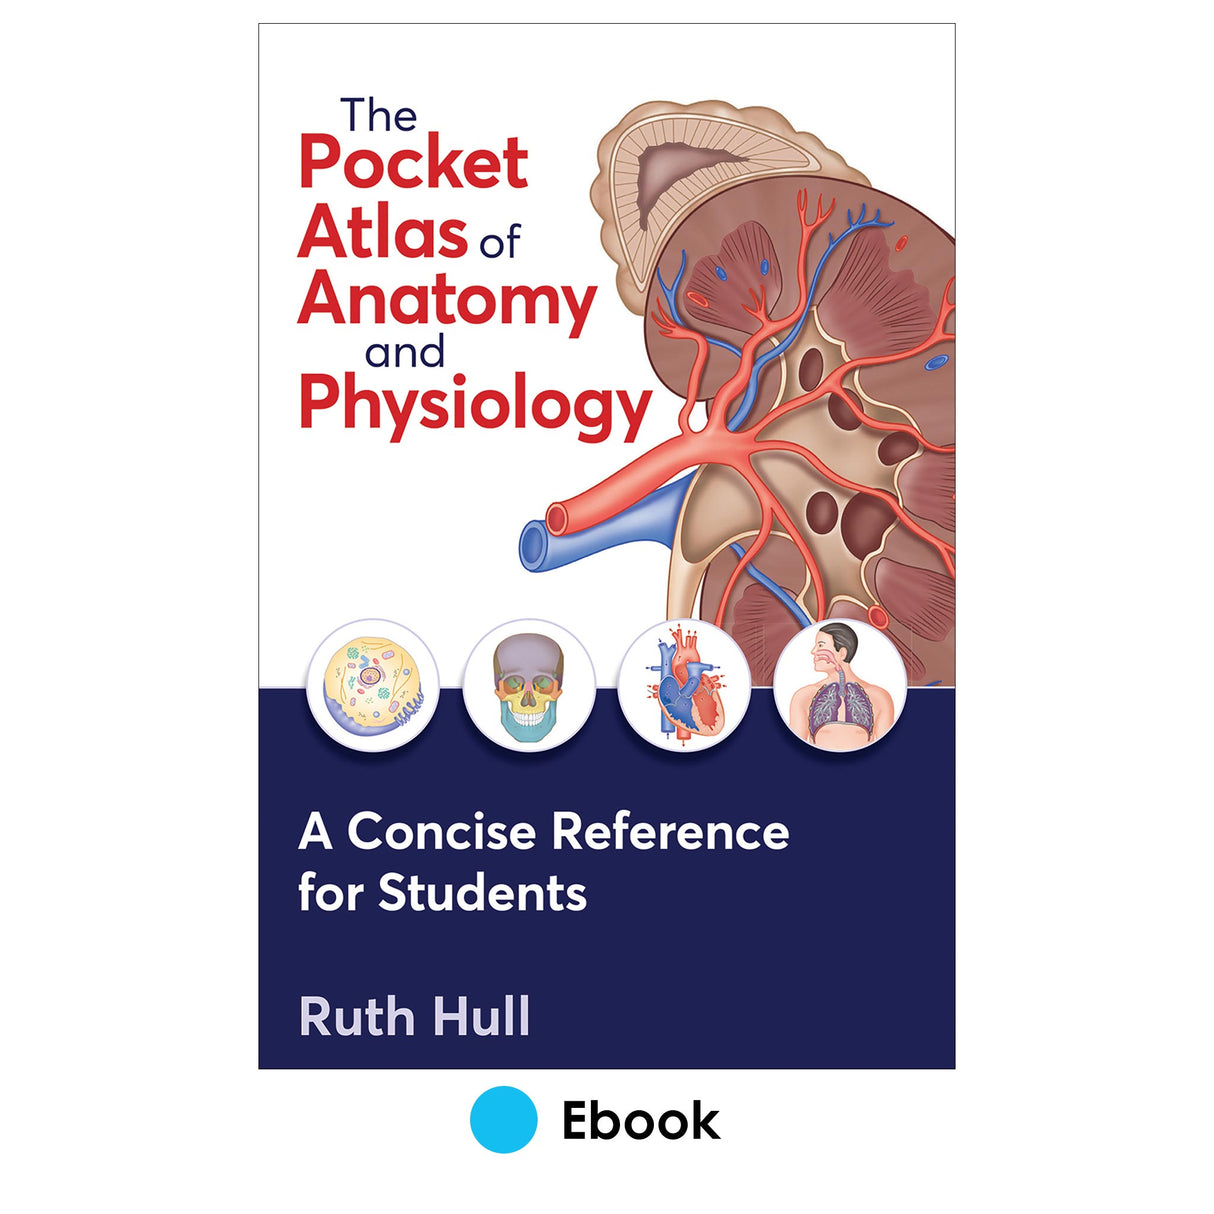 Pocket Atlas of Anatomy and Physiology epub, The